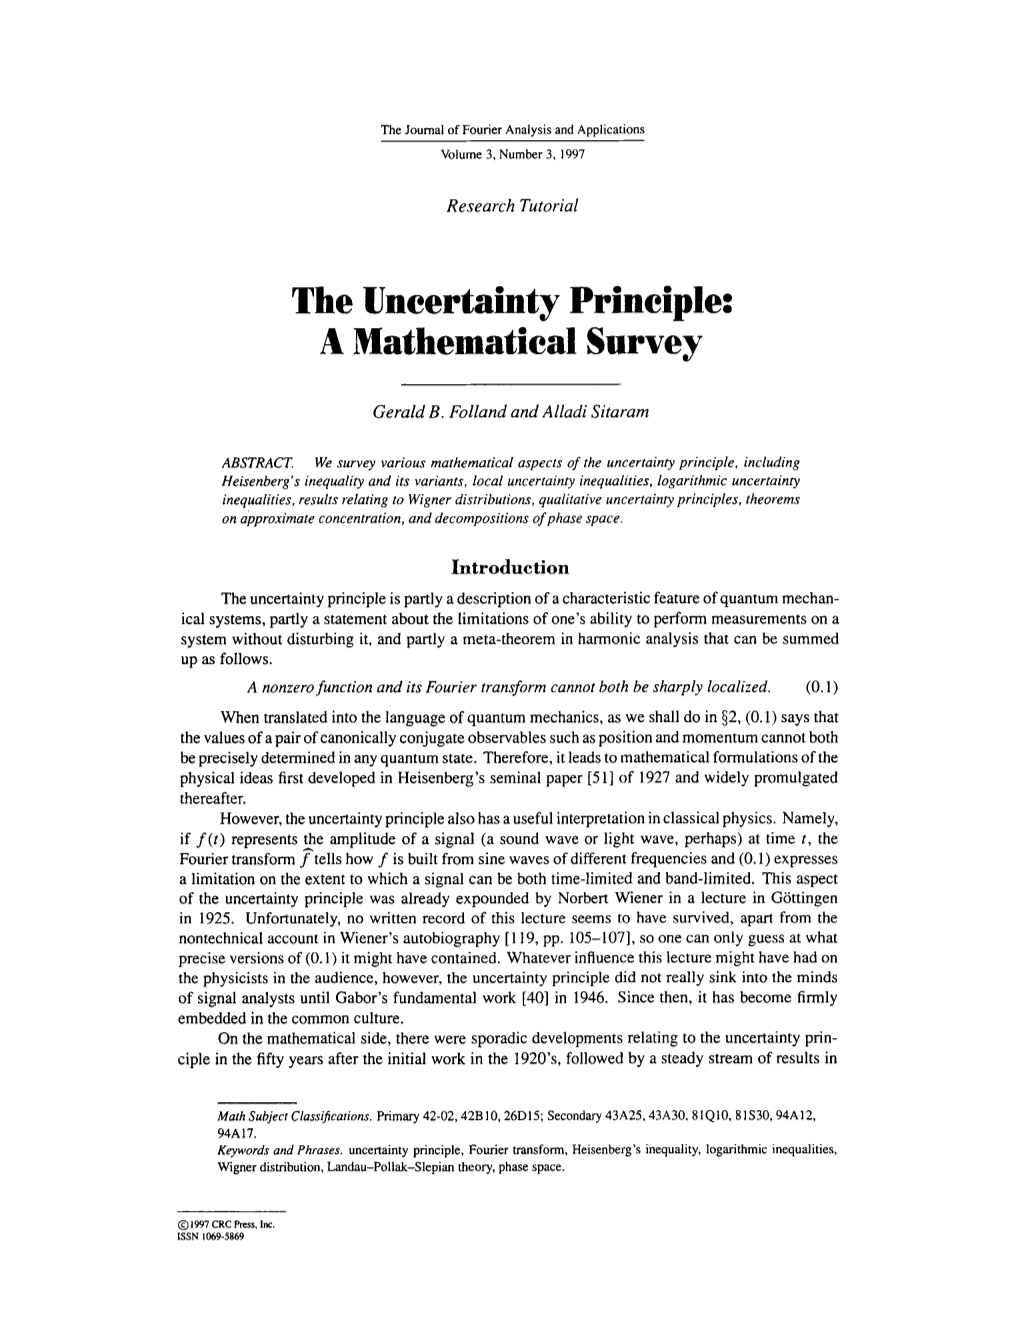 The Uncertainty Principle: a Mathematical Survey